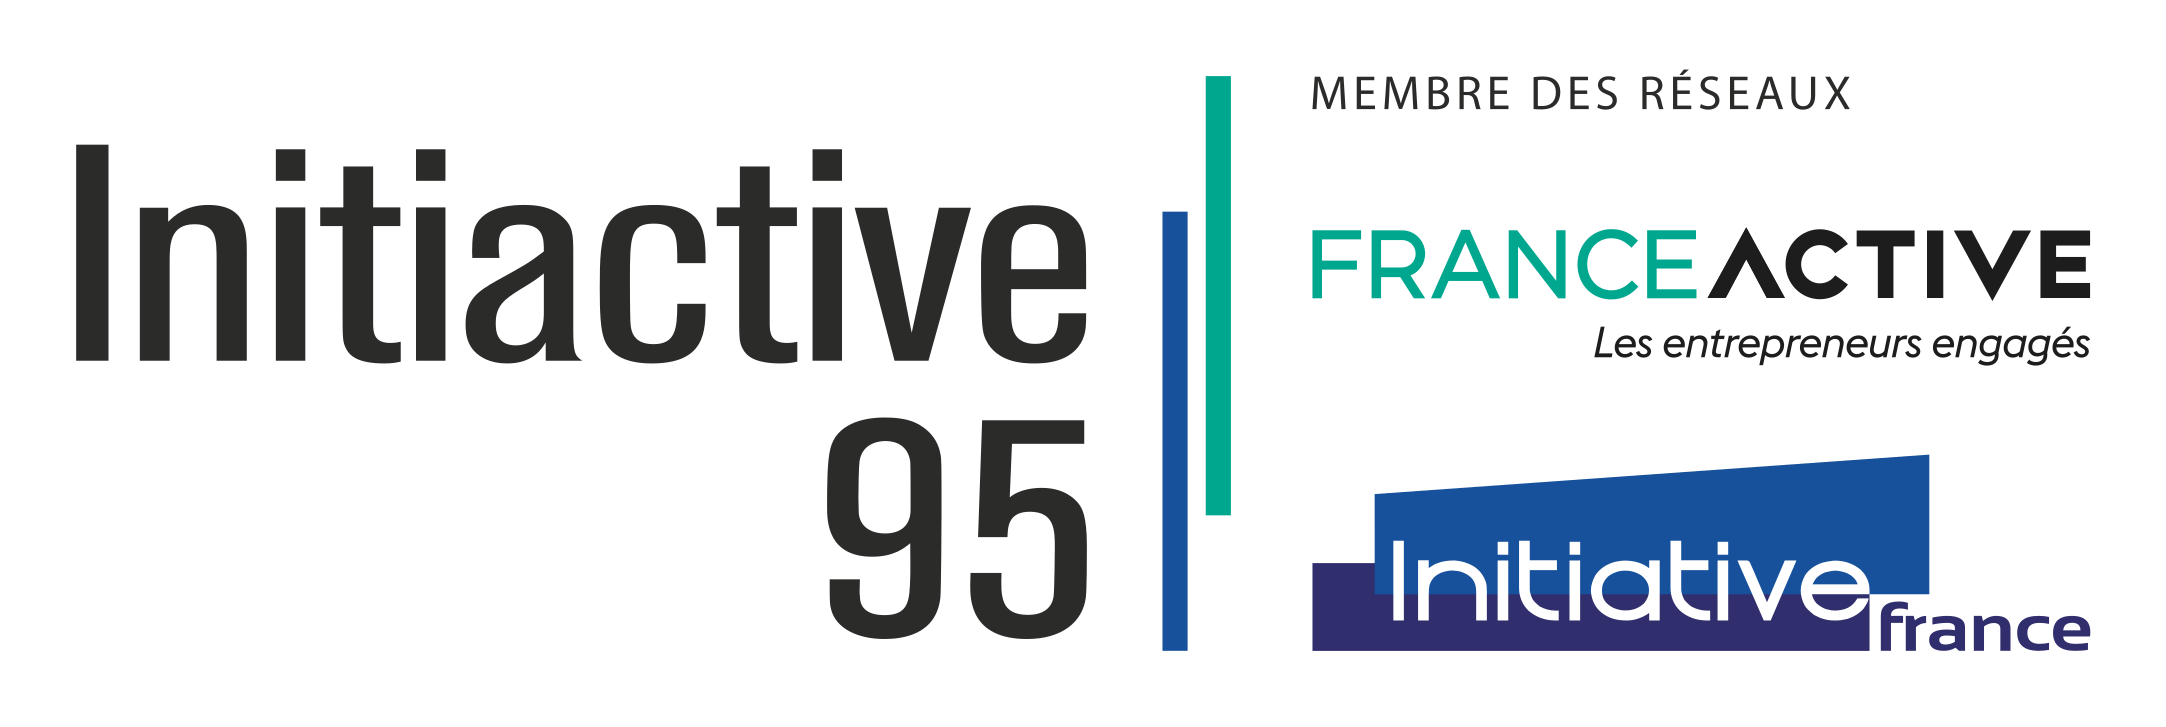 Logo Initiactive95